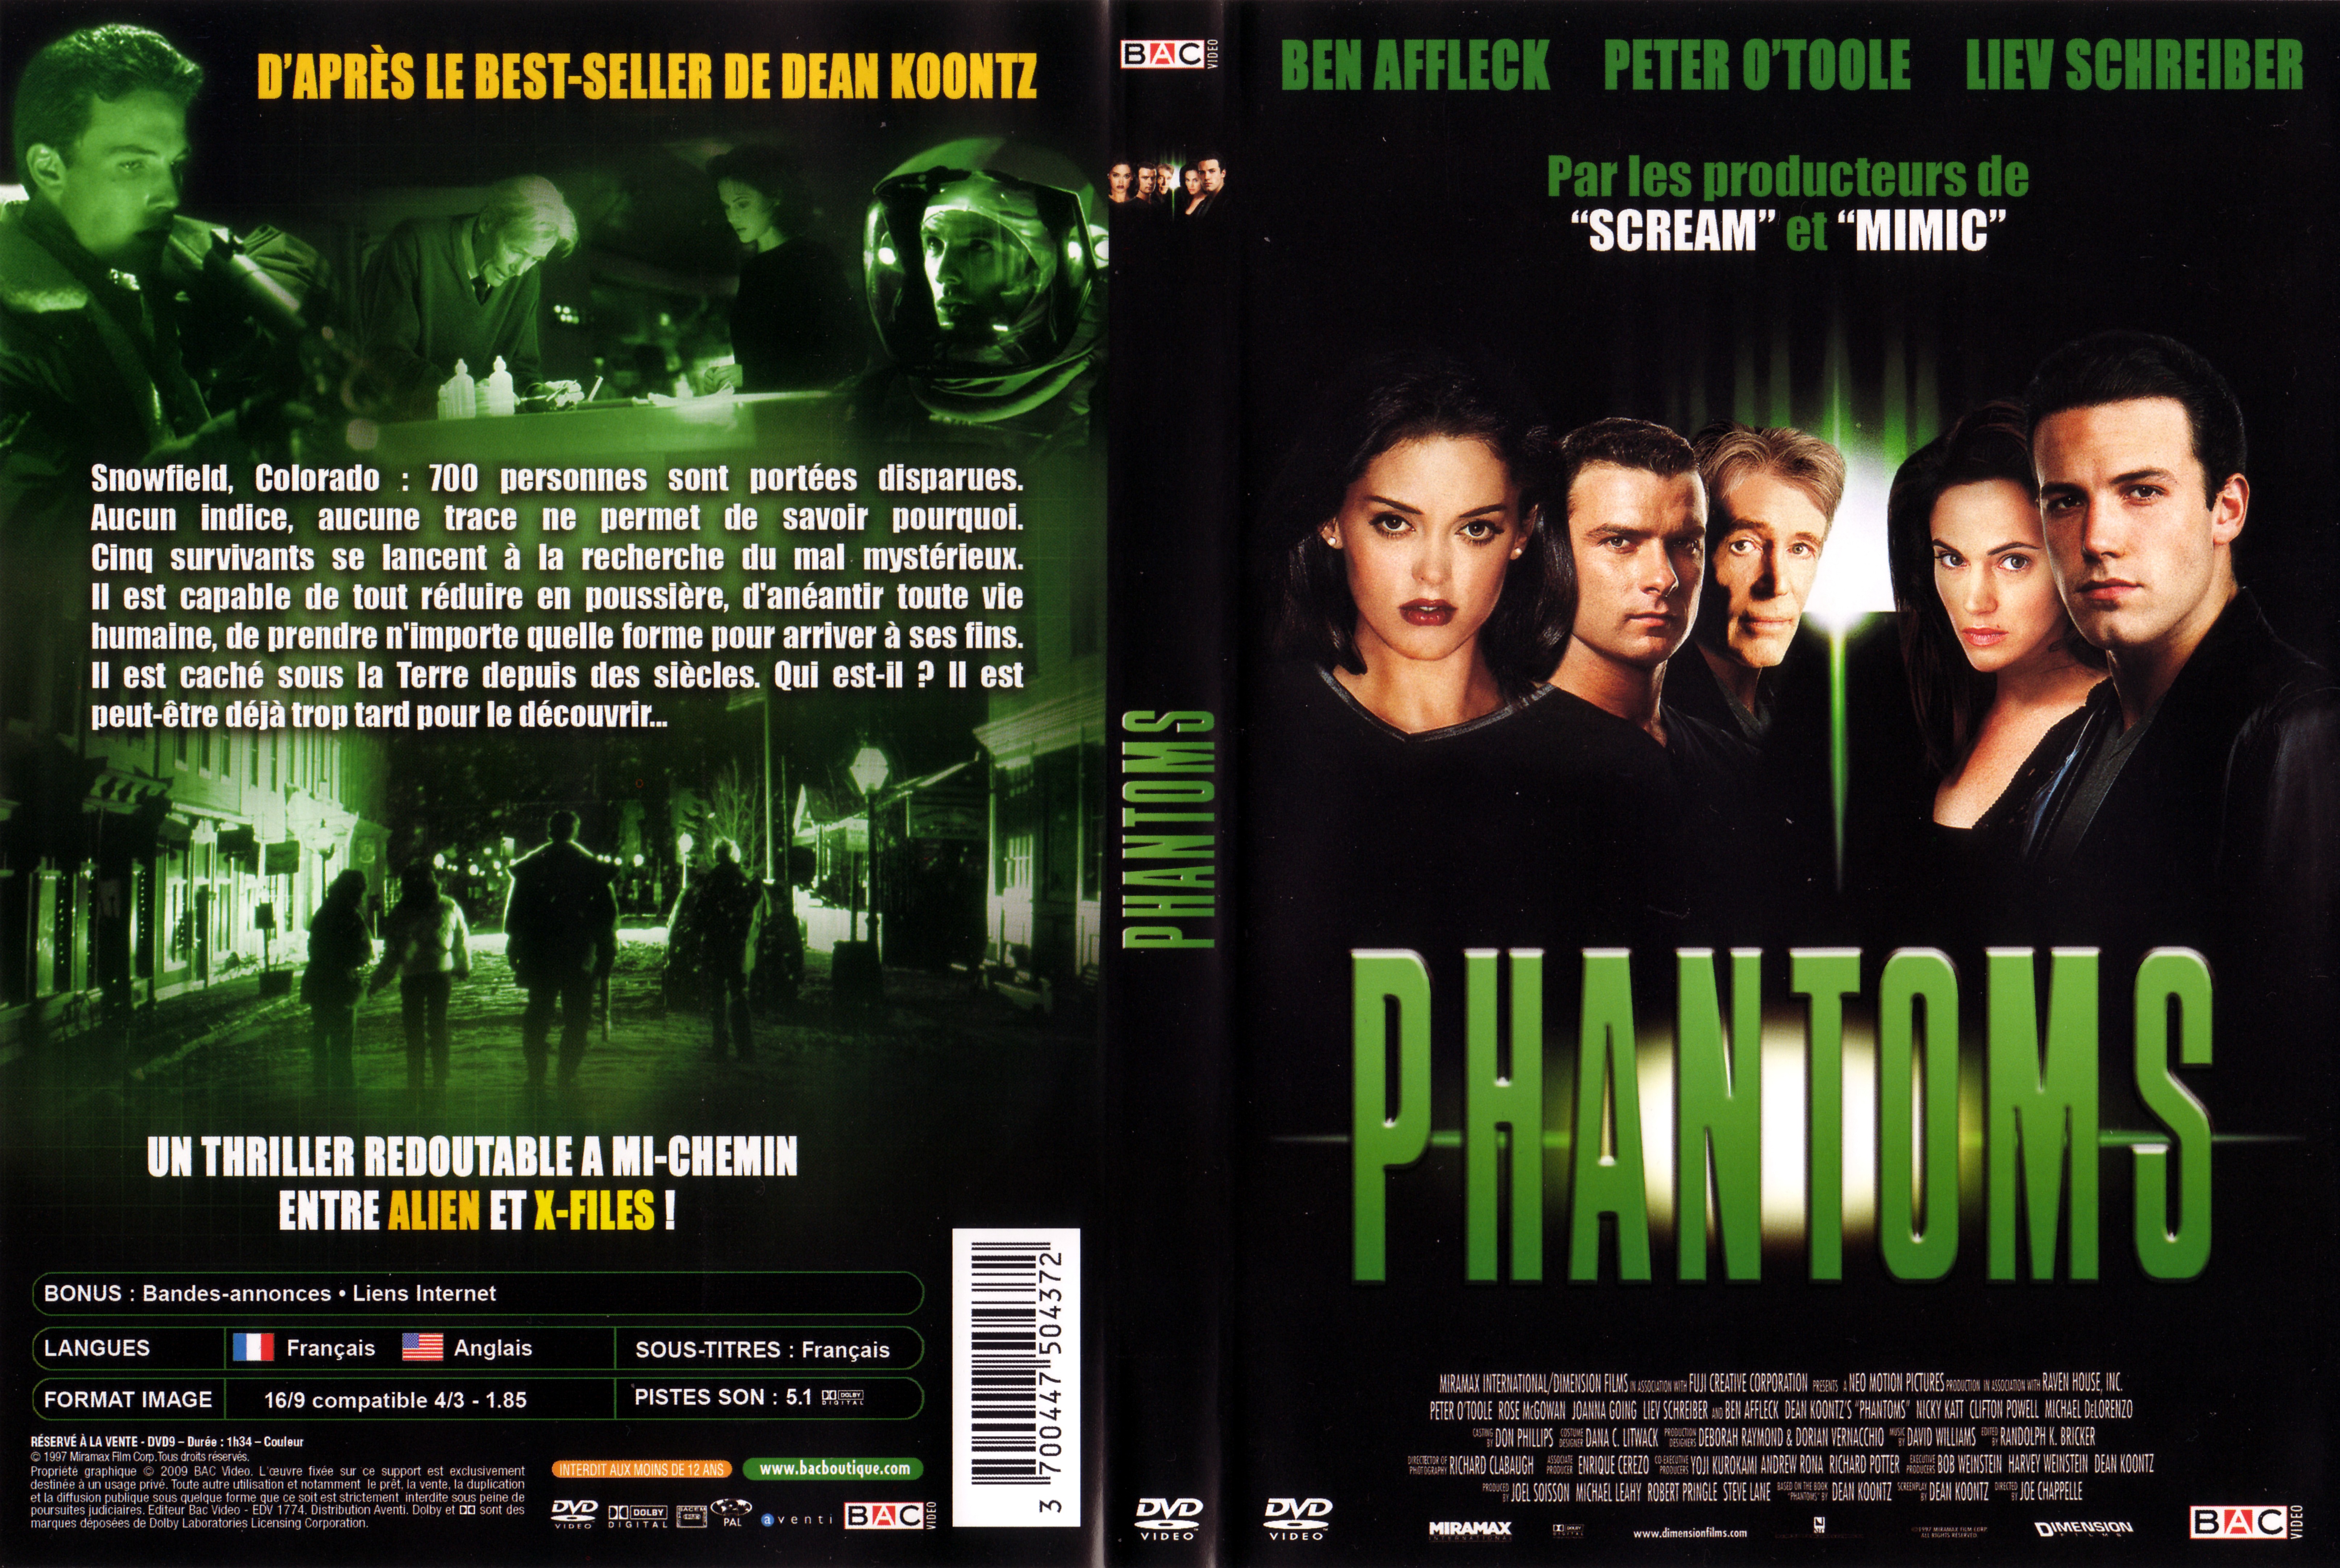 Jaquette DVD Phantoms v5